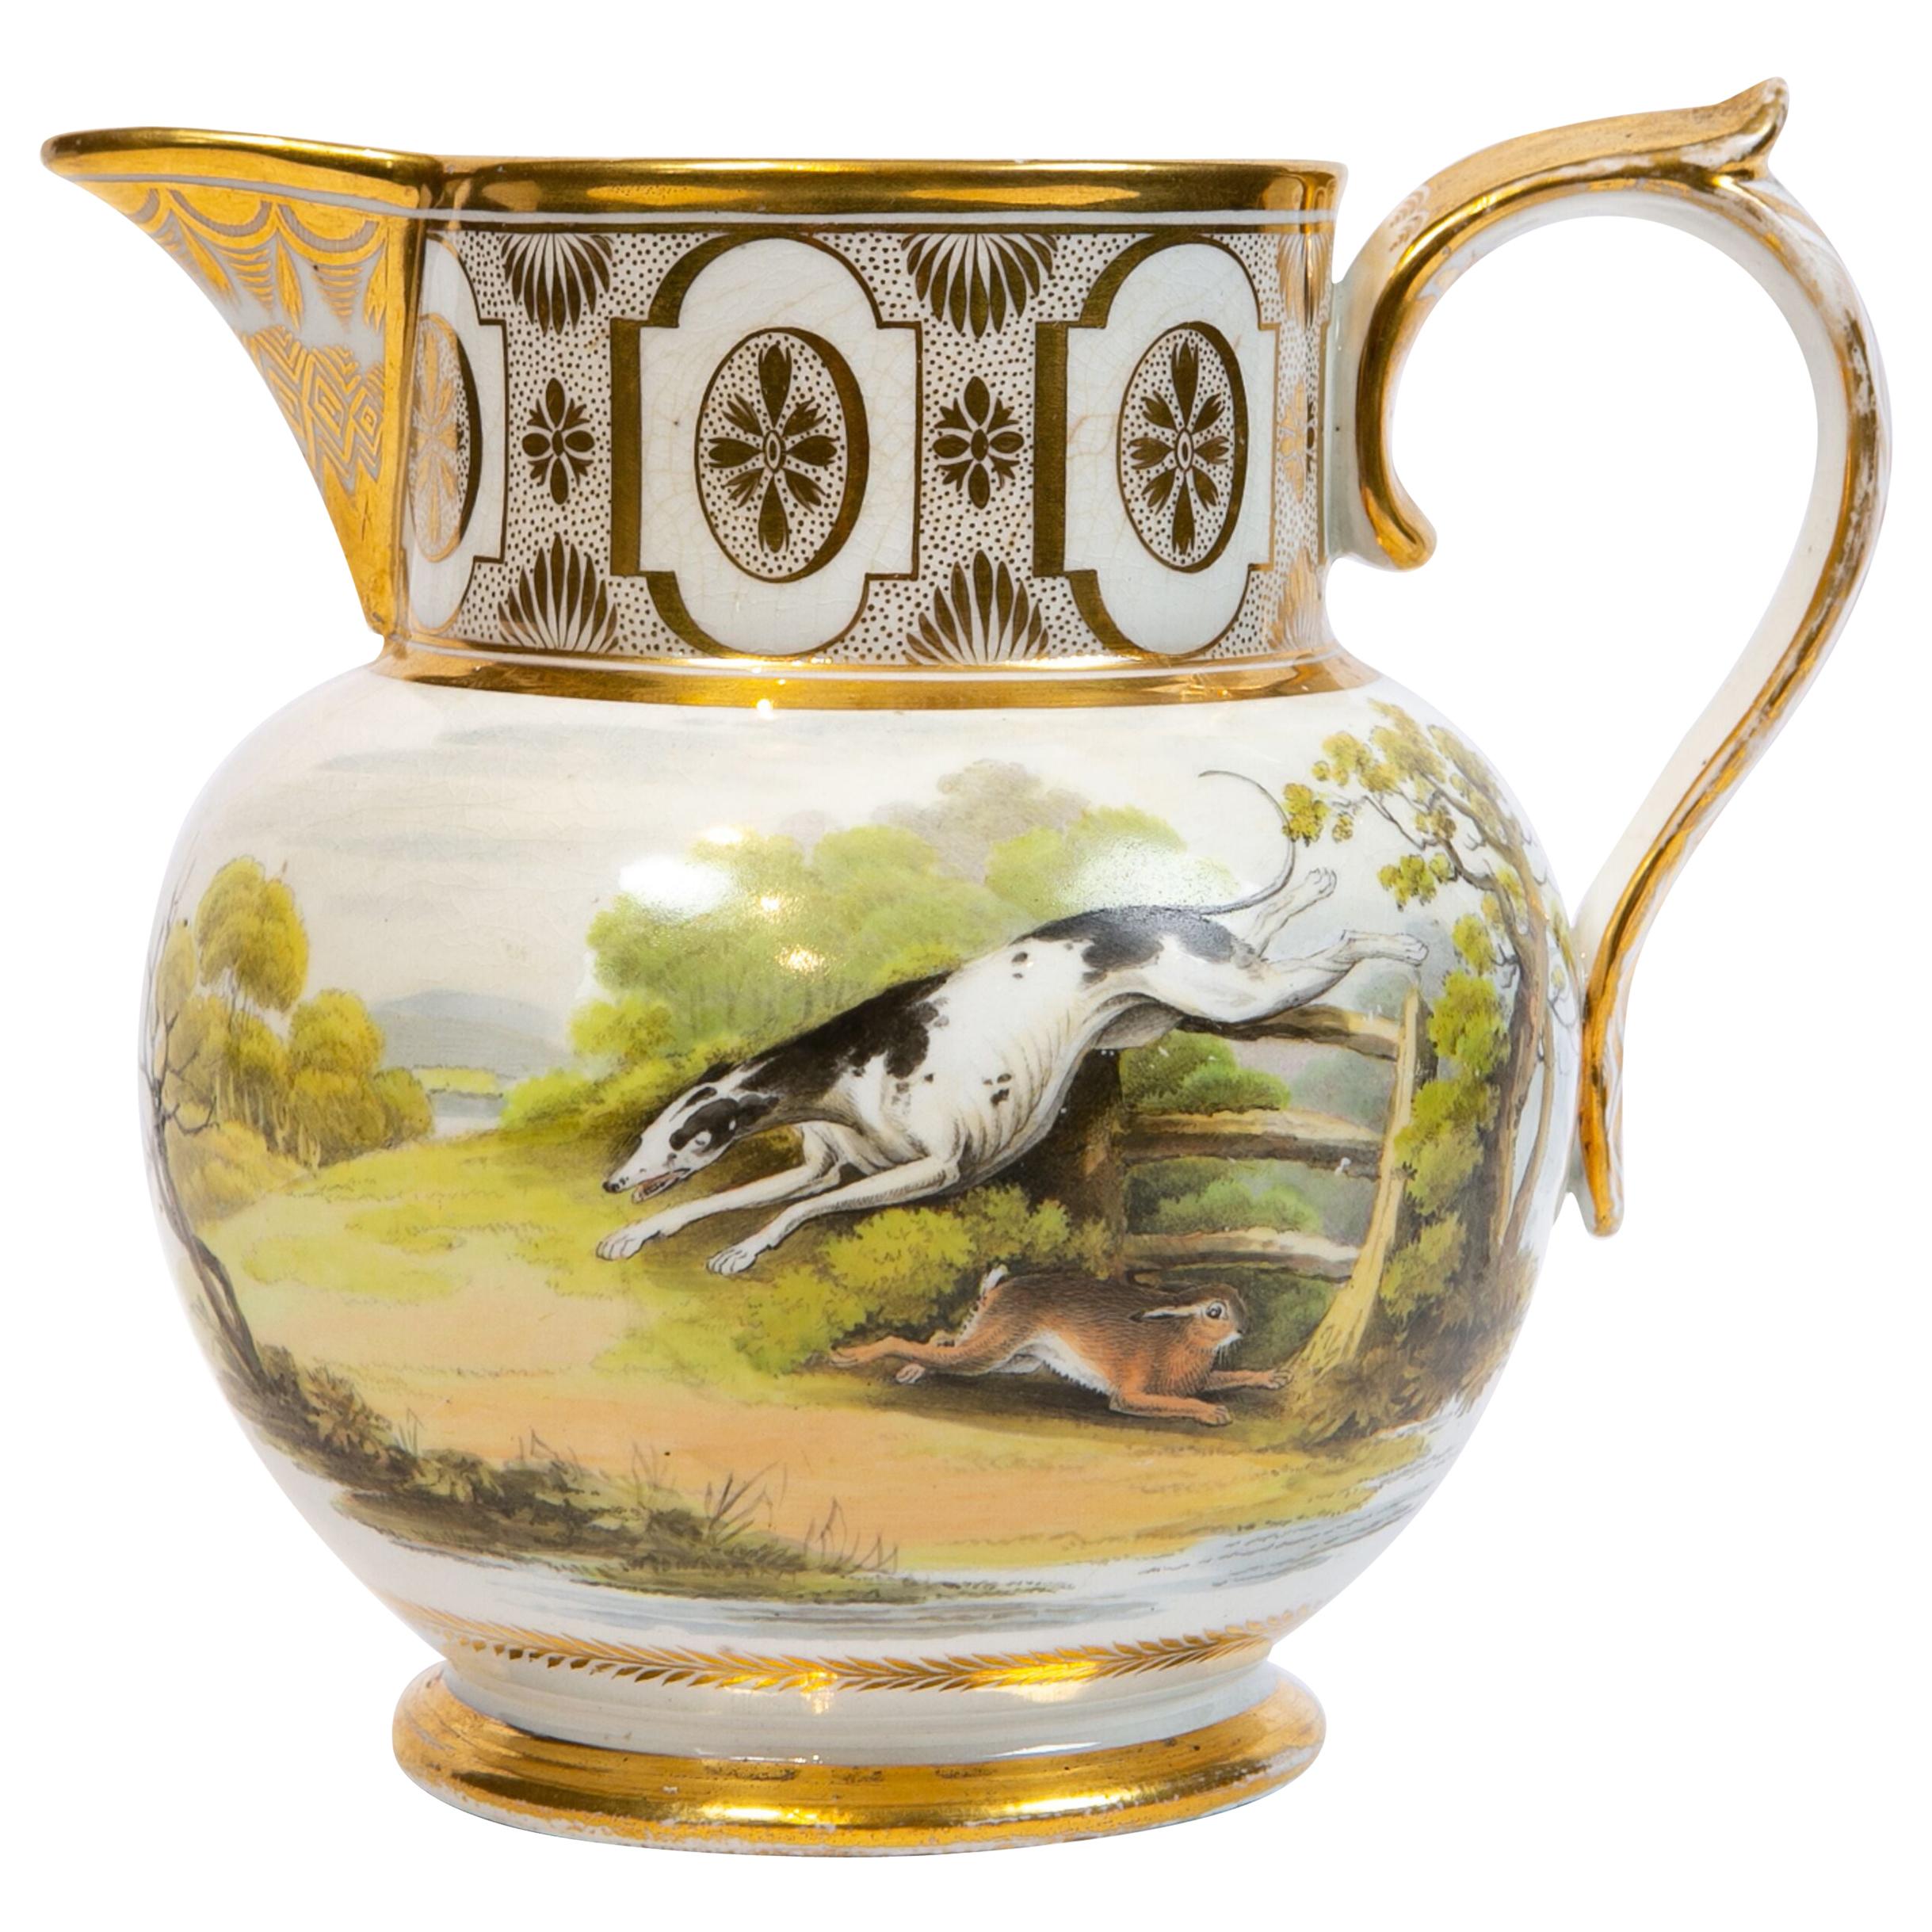  Antique Porcelain Pitcher Showing Hand Painted Hunt Scene England Circa 1825